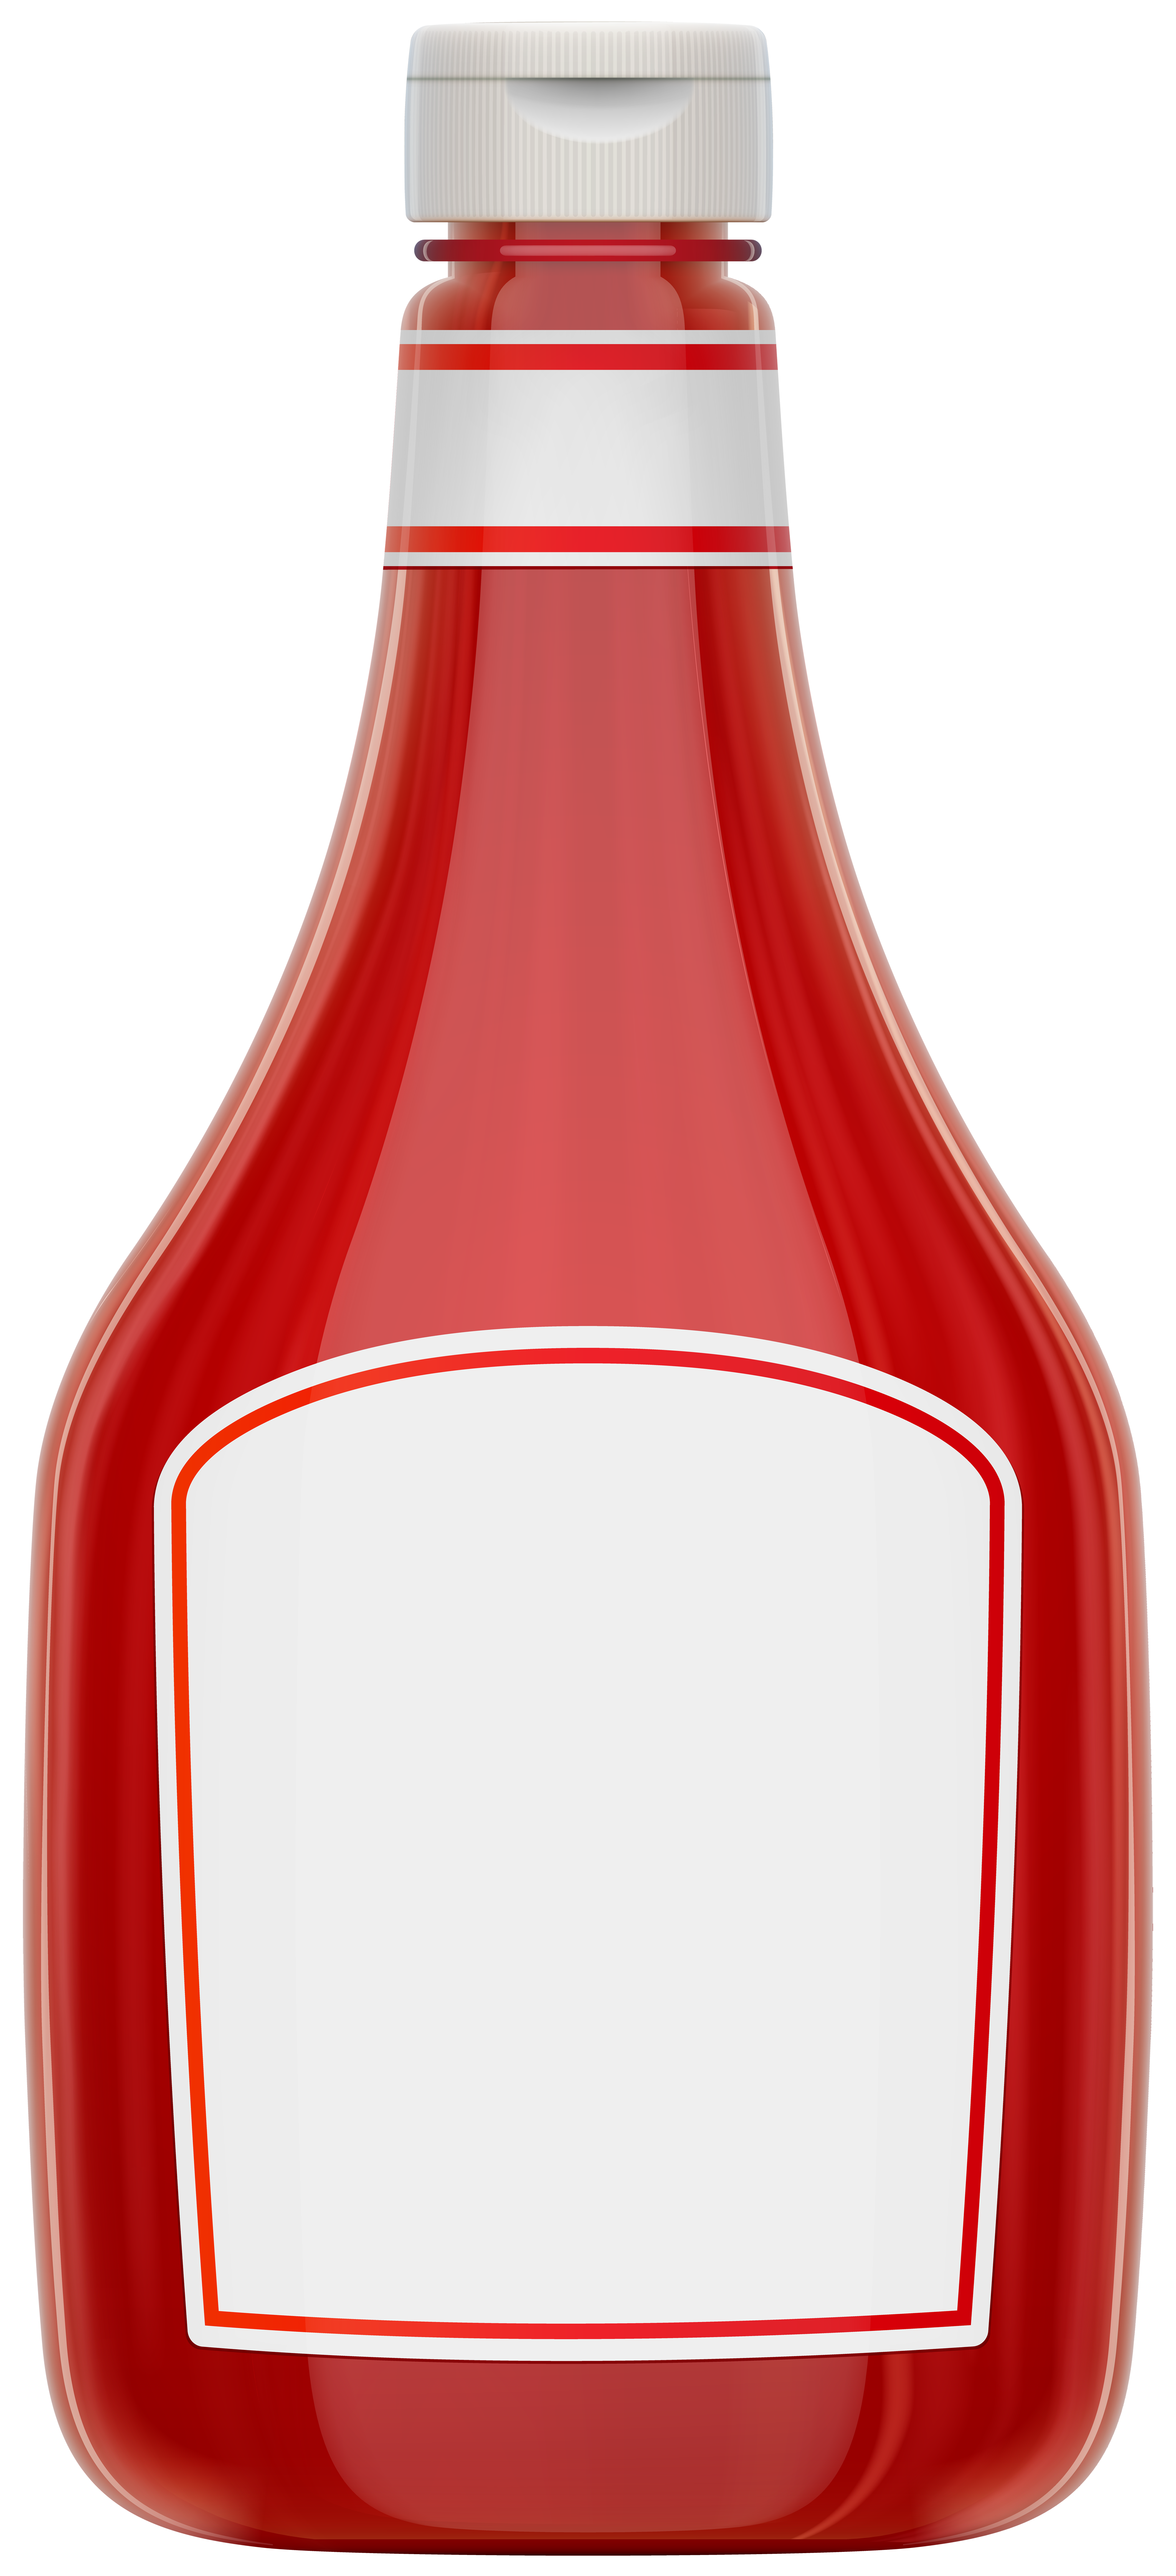 Прозрачный кетчуп. Кетчуп Хайнц томатный. Прозрачный кетчуп Хайнц. Кетчуп в бутылке. Бутылка кетчупа без фона.